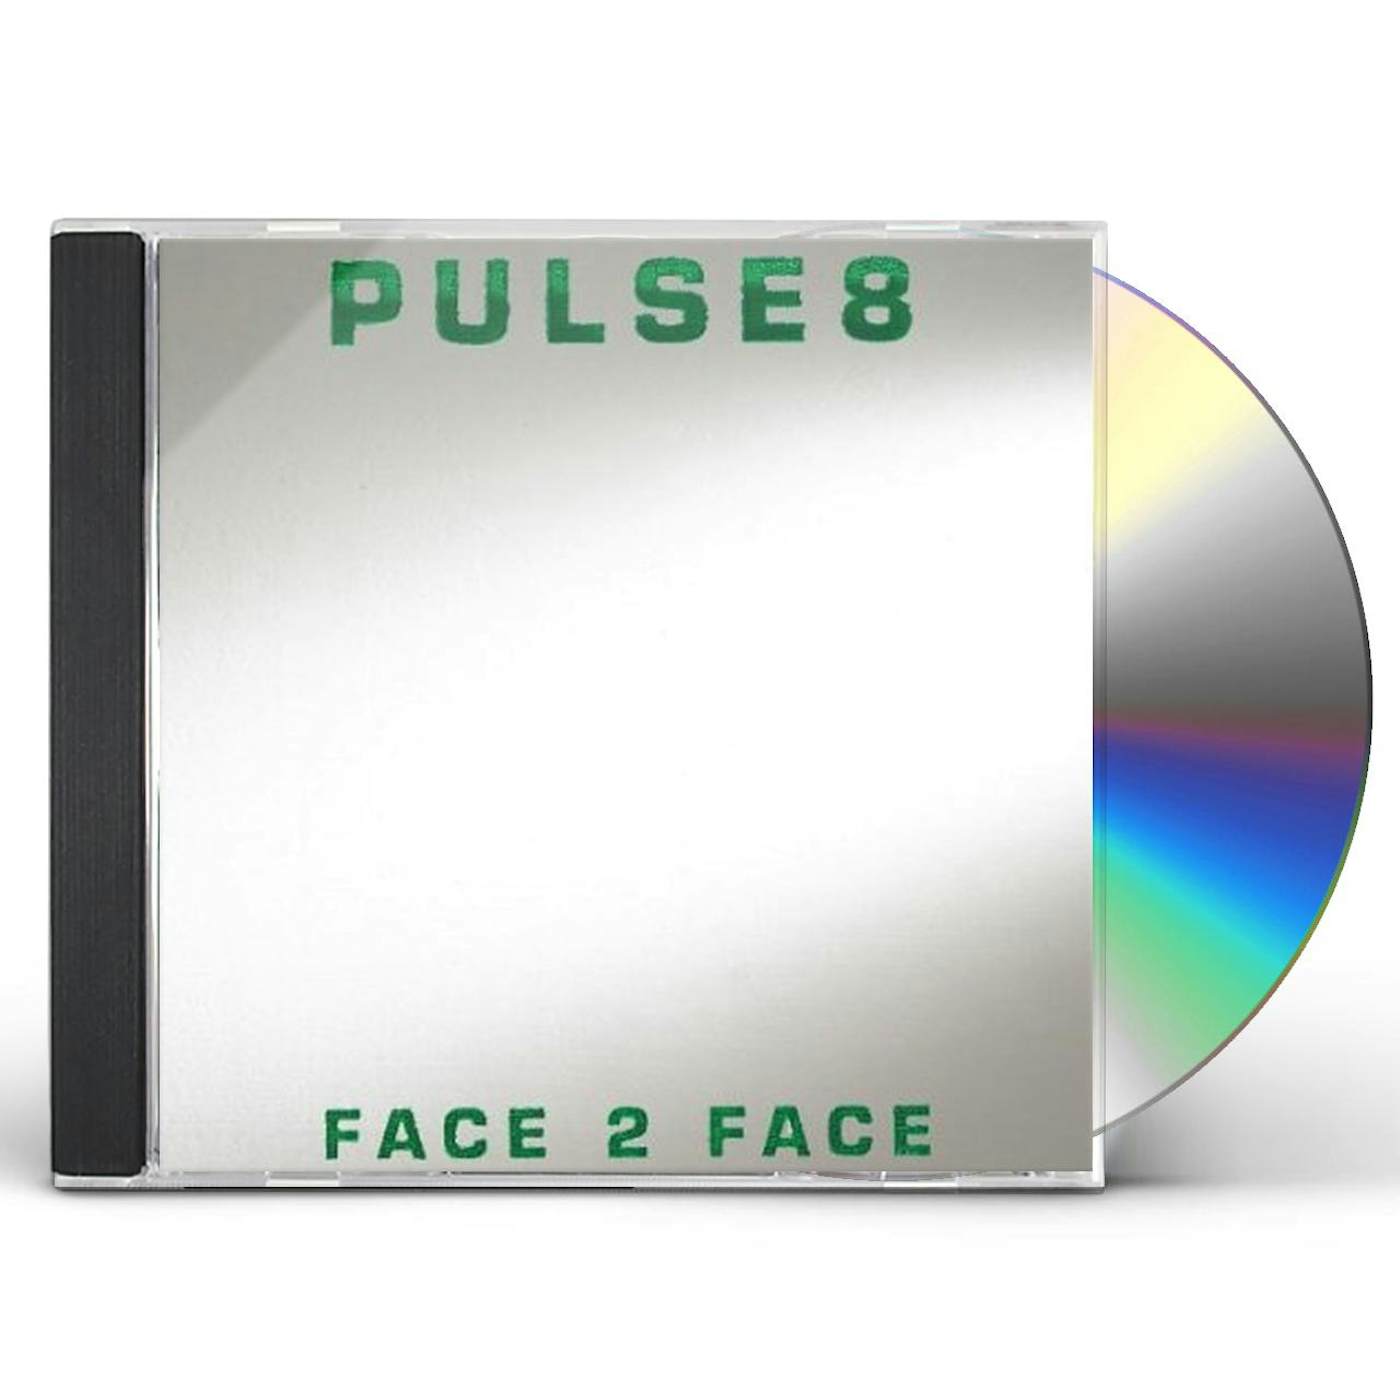 Pulse8 FACE 2 FACE CD